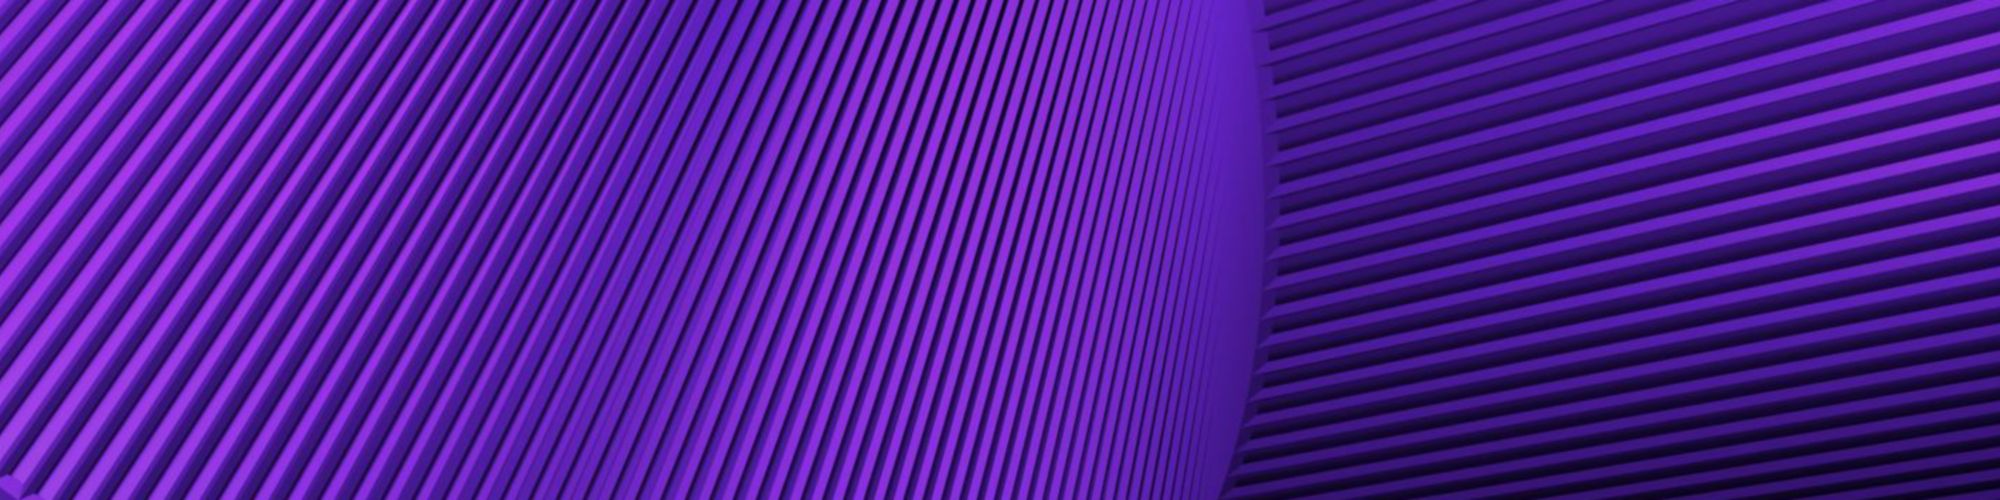 purple-circular-abstract-texture